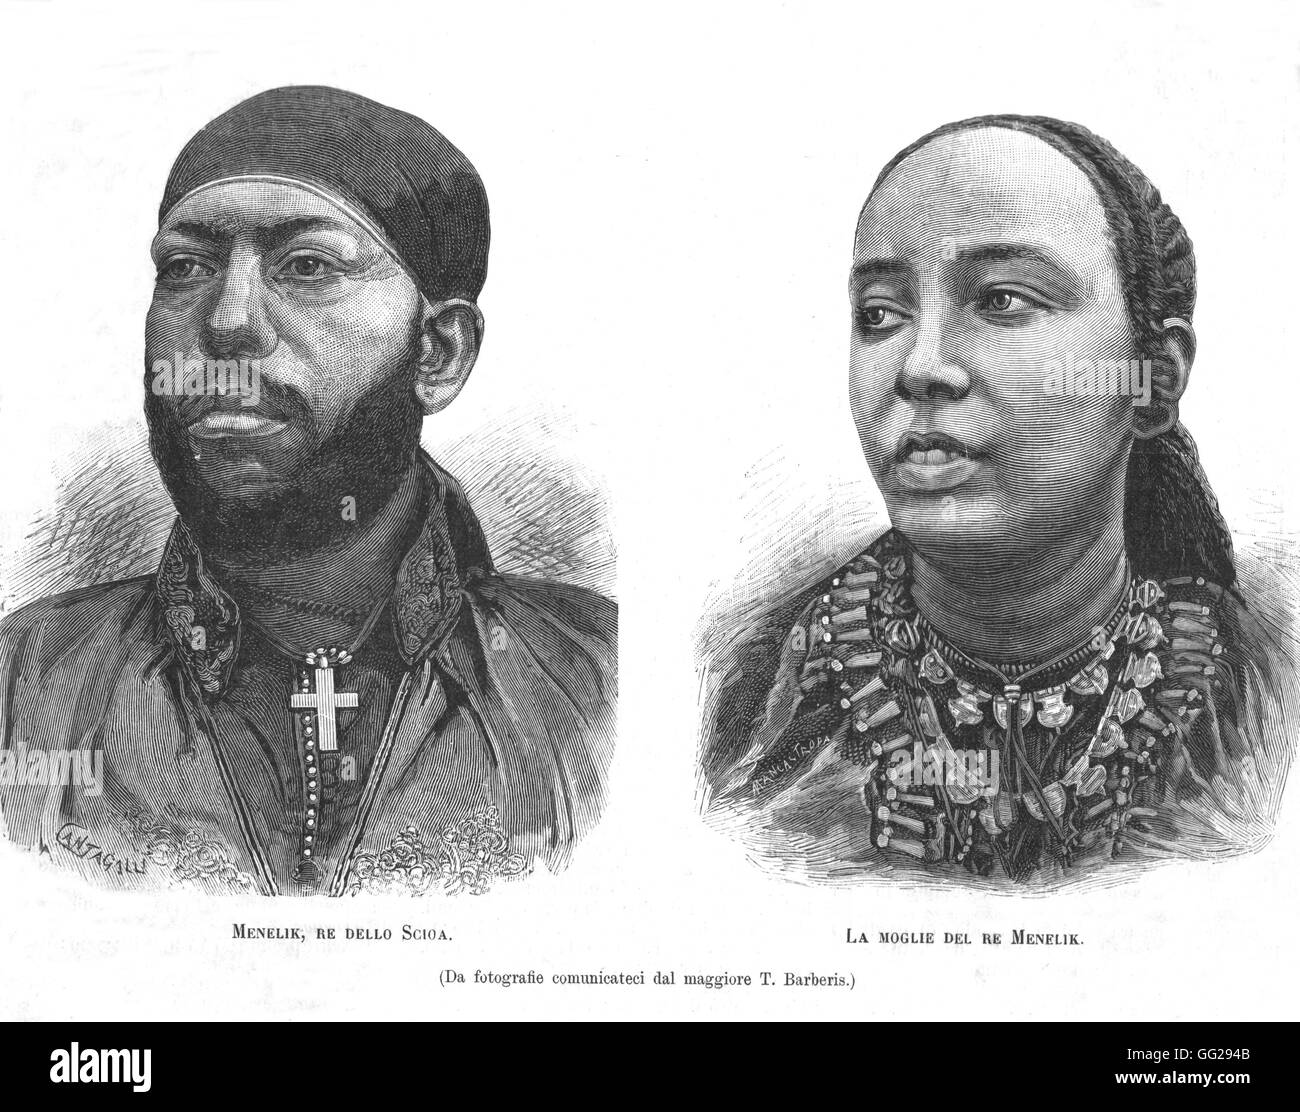 Menelik II, Emperor of Ethiopia, and his wife, in 'L'Illustrazione italiana' February 2, 1887 Ethiopia (Abyssinia) Stock Photo